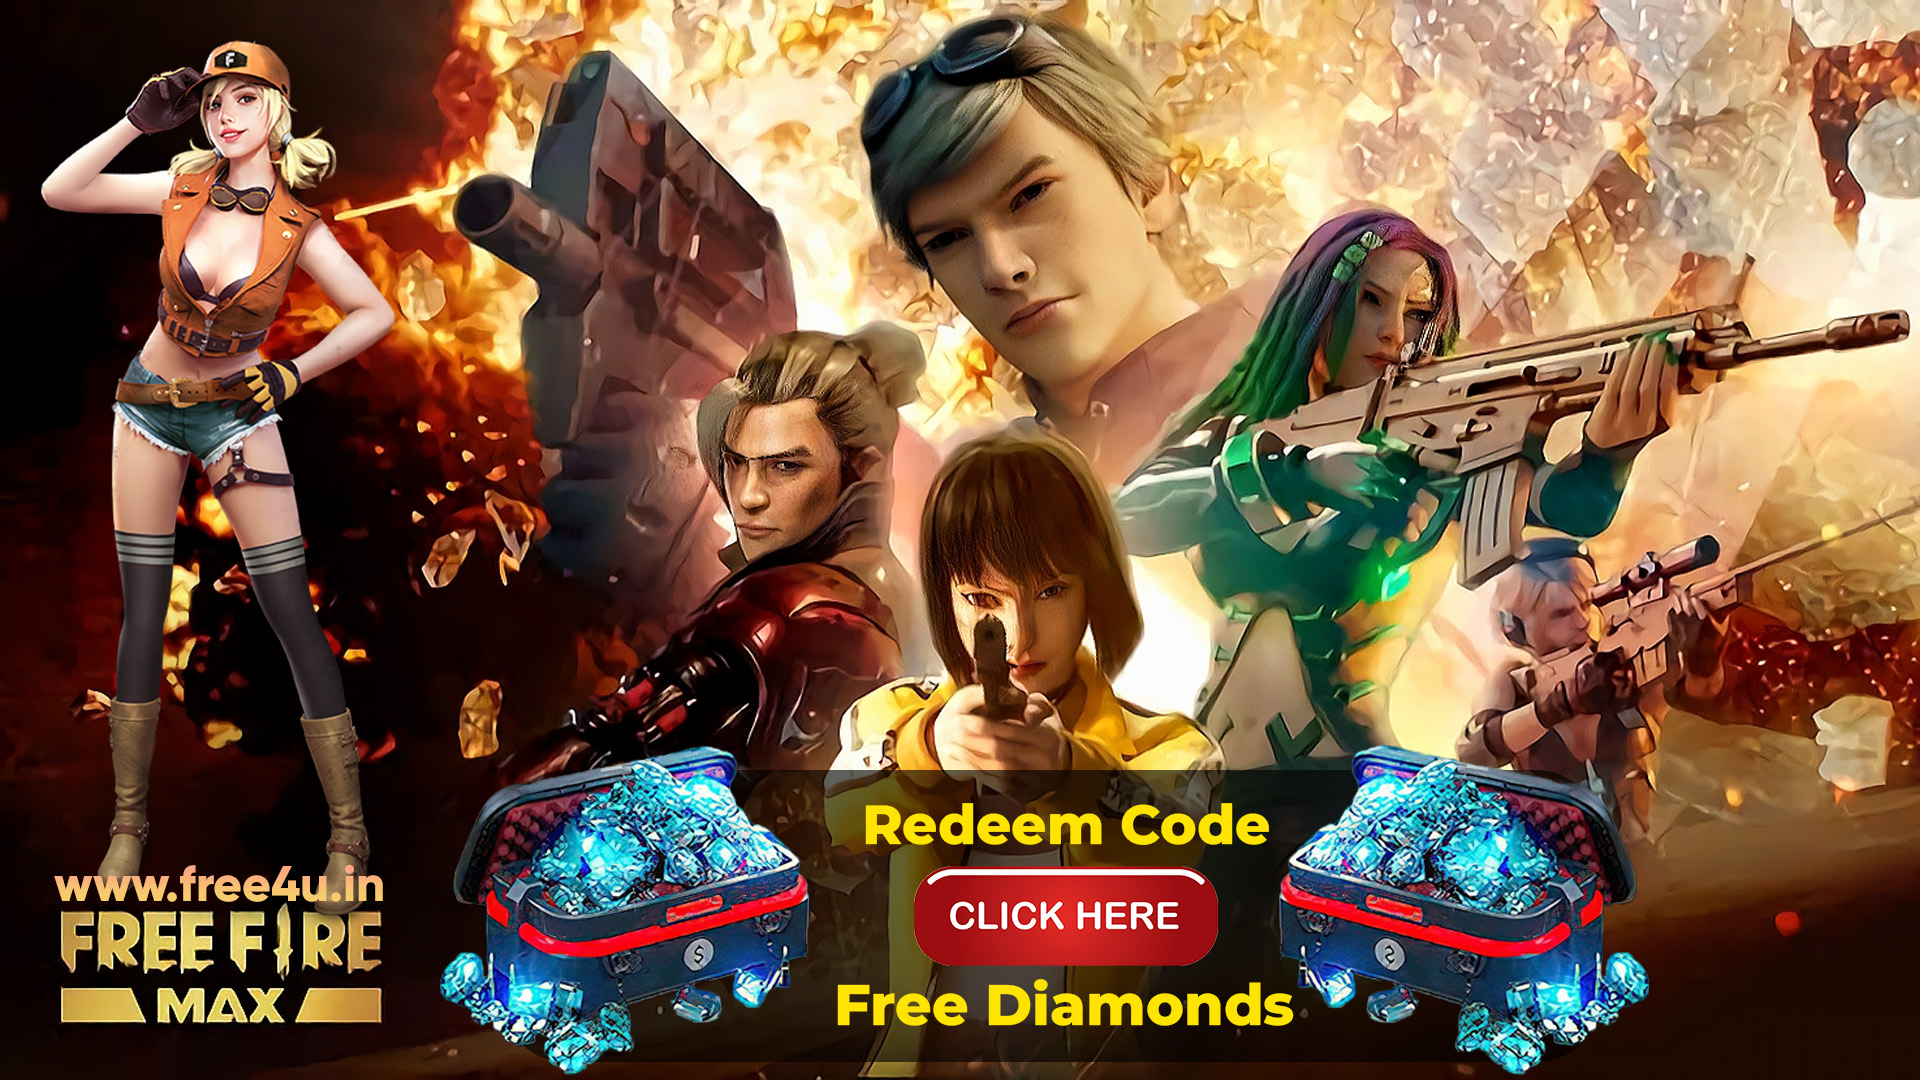 Free Fire Max Redeem Code